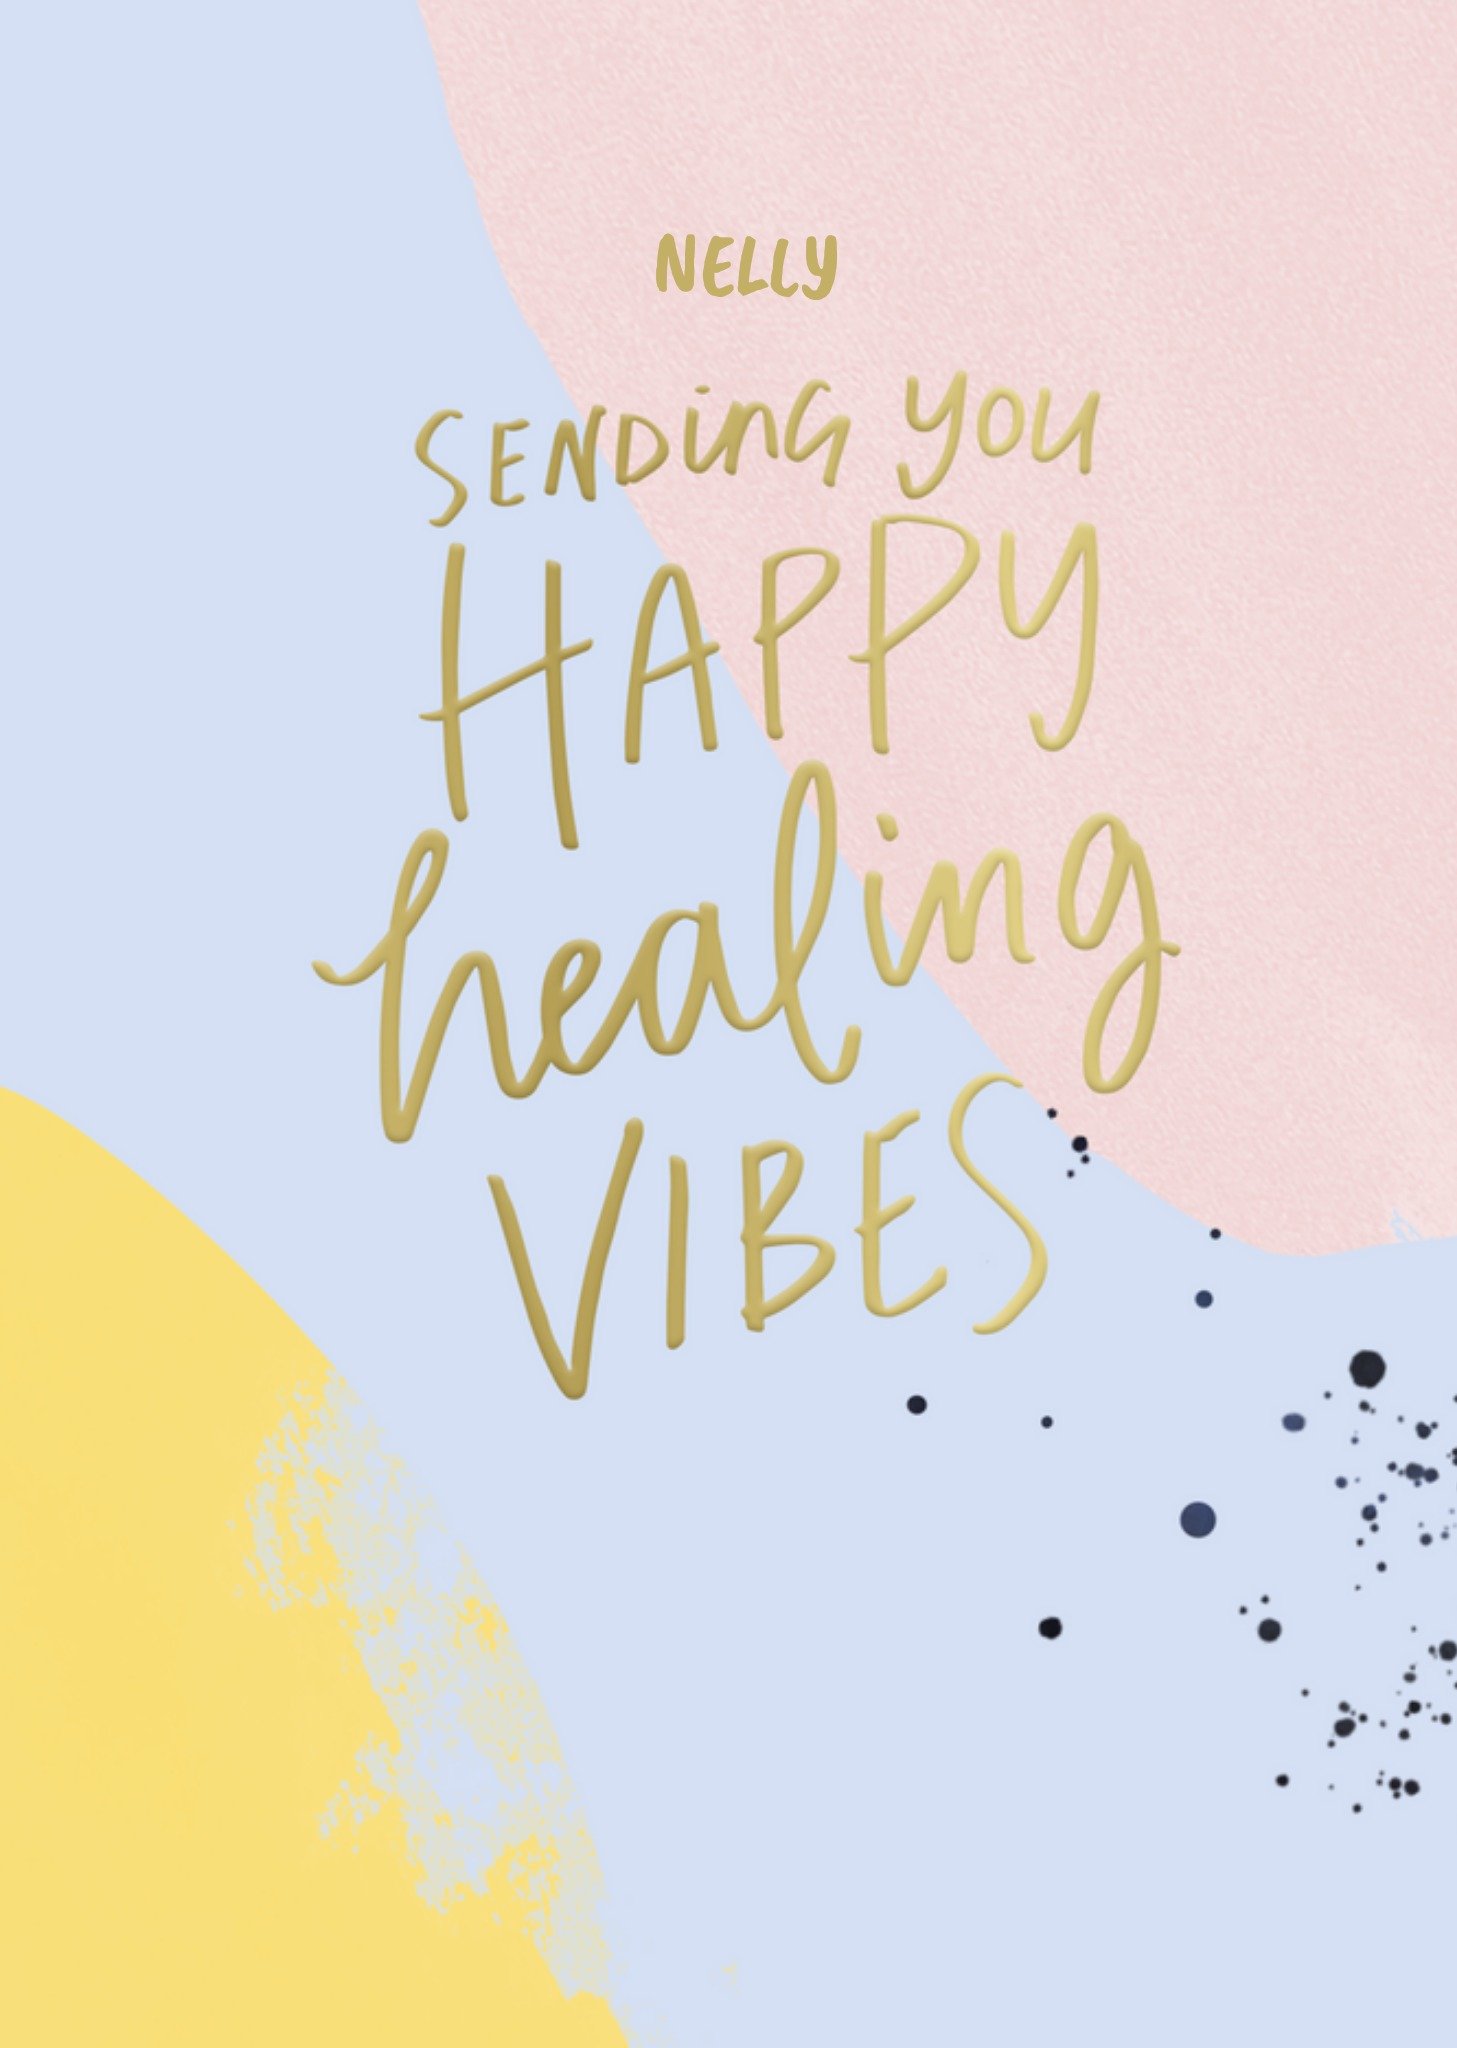 UK Greetings - Beterschapskaart - Happy healing vibes